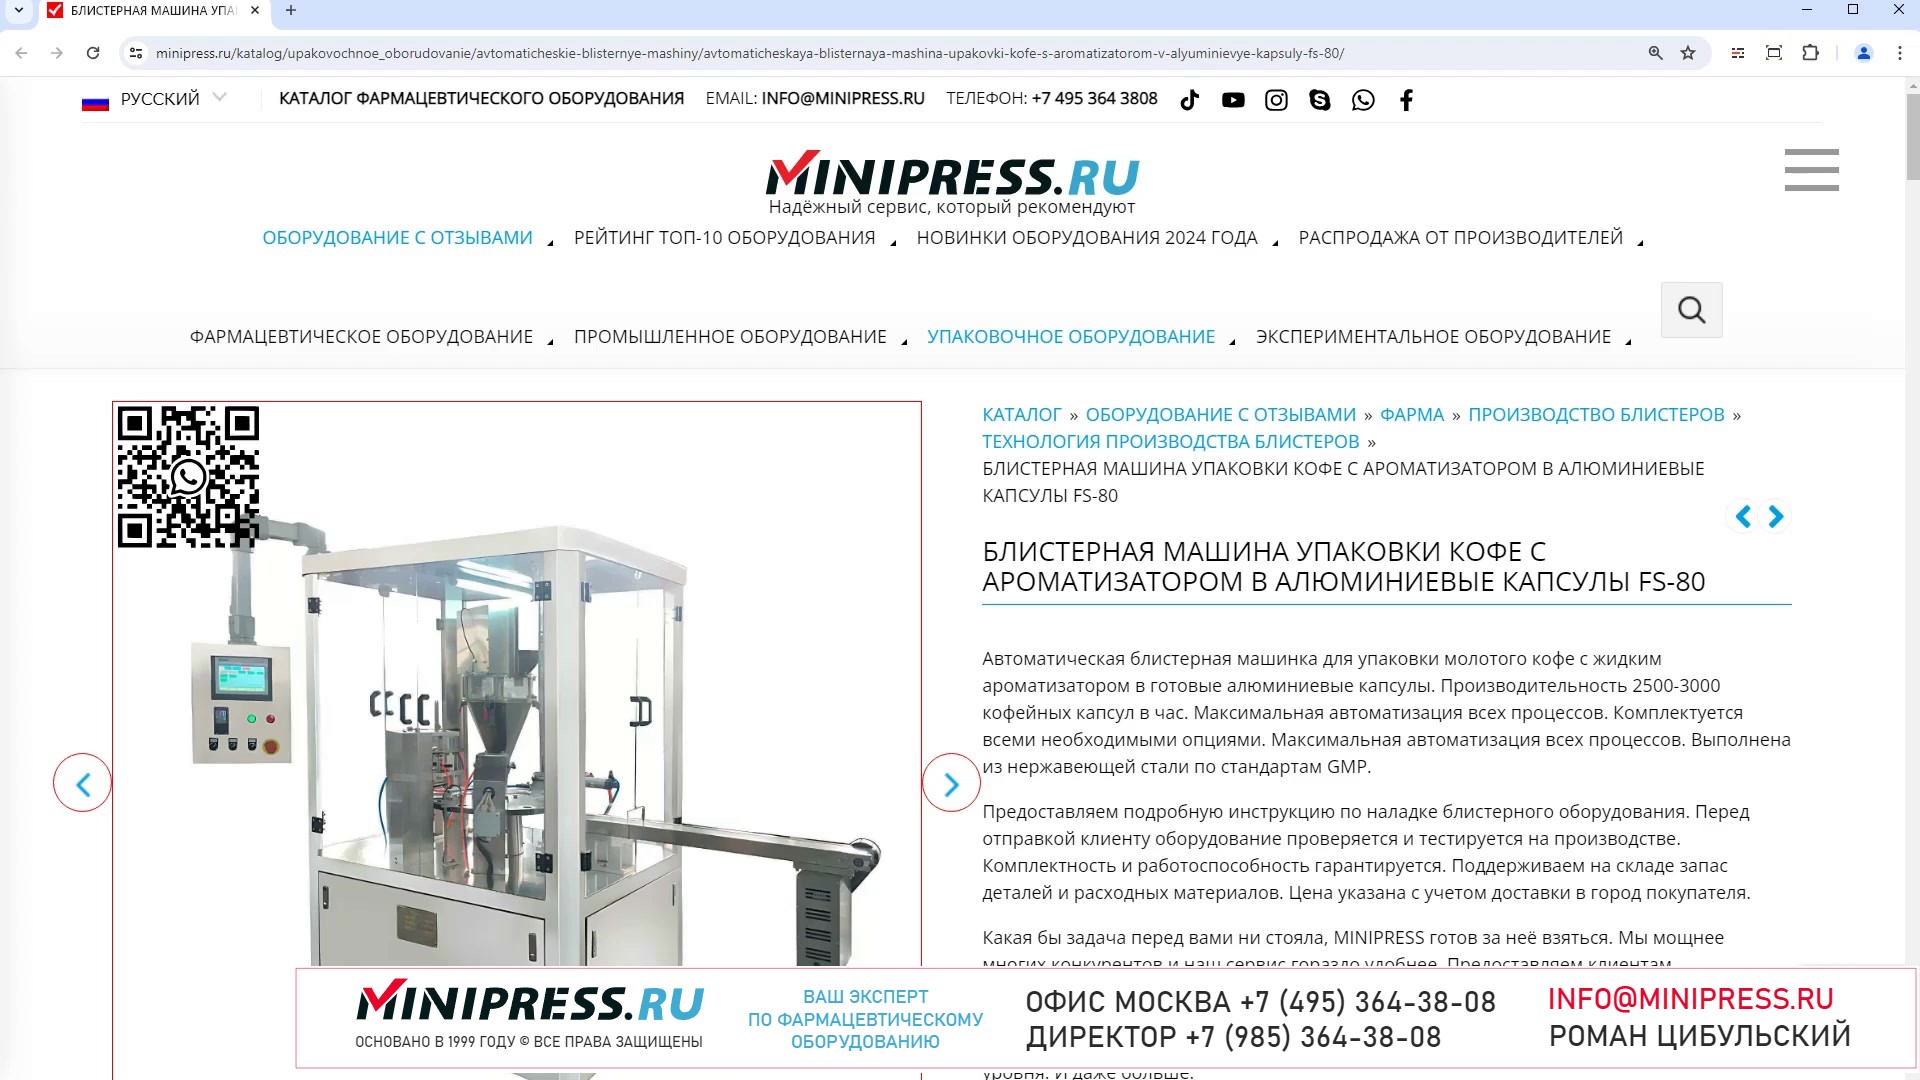 Minipress.ru Блистерная машина упаковки кофе с ароматизатором в алюминиевые капсулы FS-80